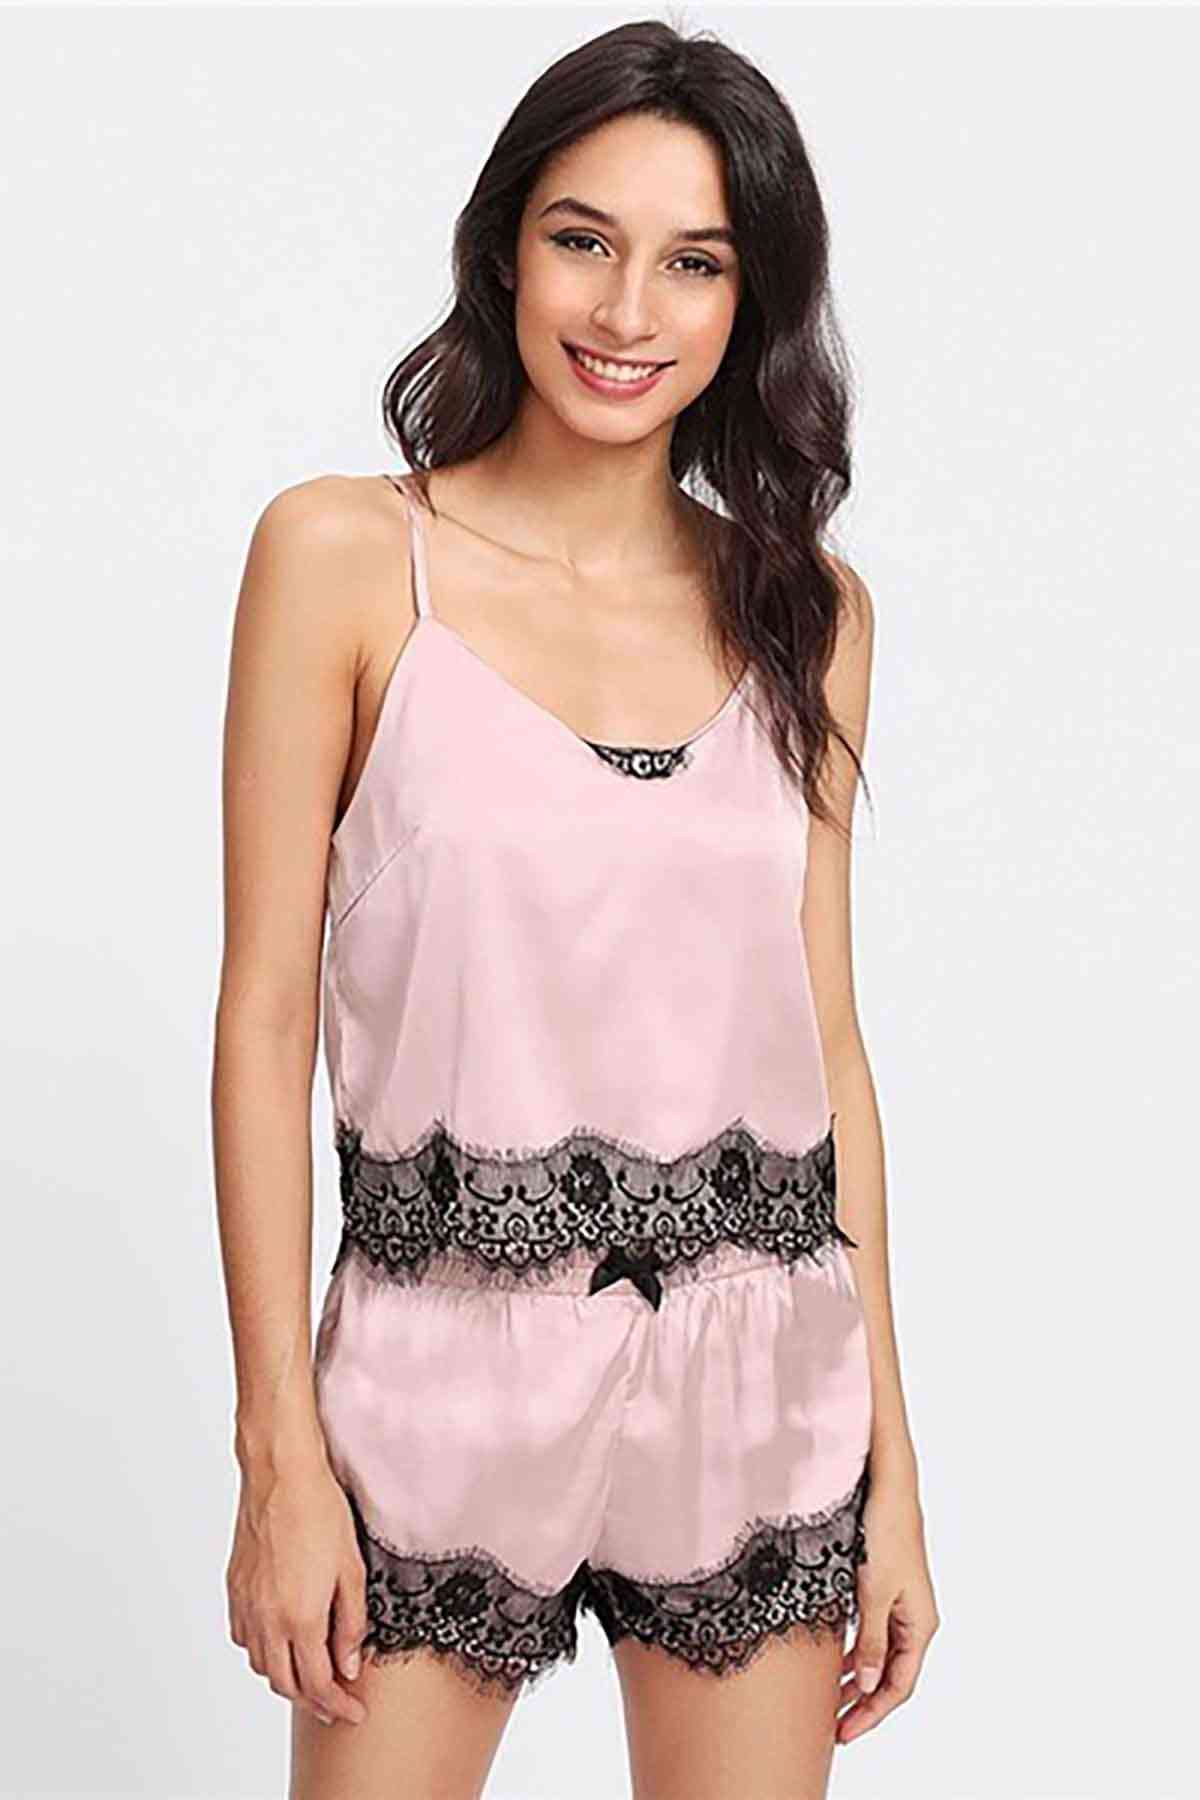 Lace Satin Sorted Nightgown Set Womens Nightgown Sleepwear Sexy Sleepwear Sexy Lingerie Lace Lingerie Babydoll Underwear